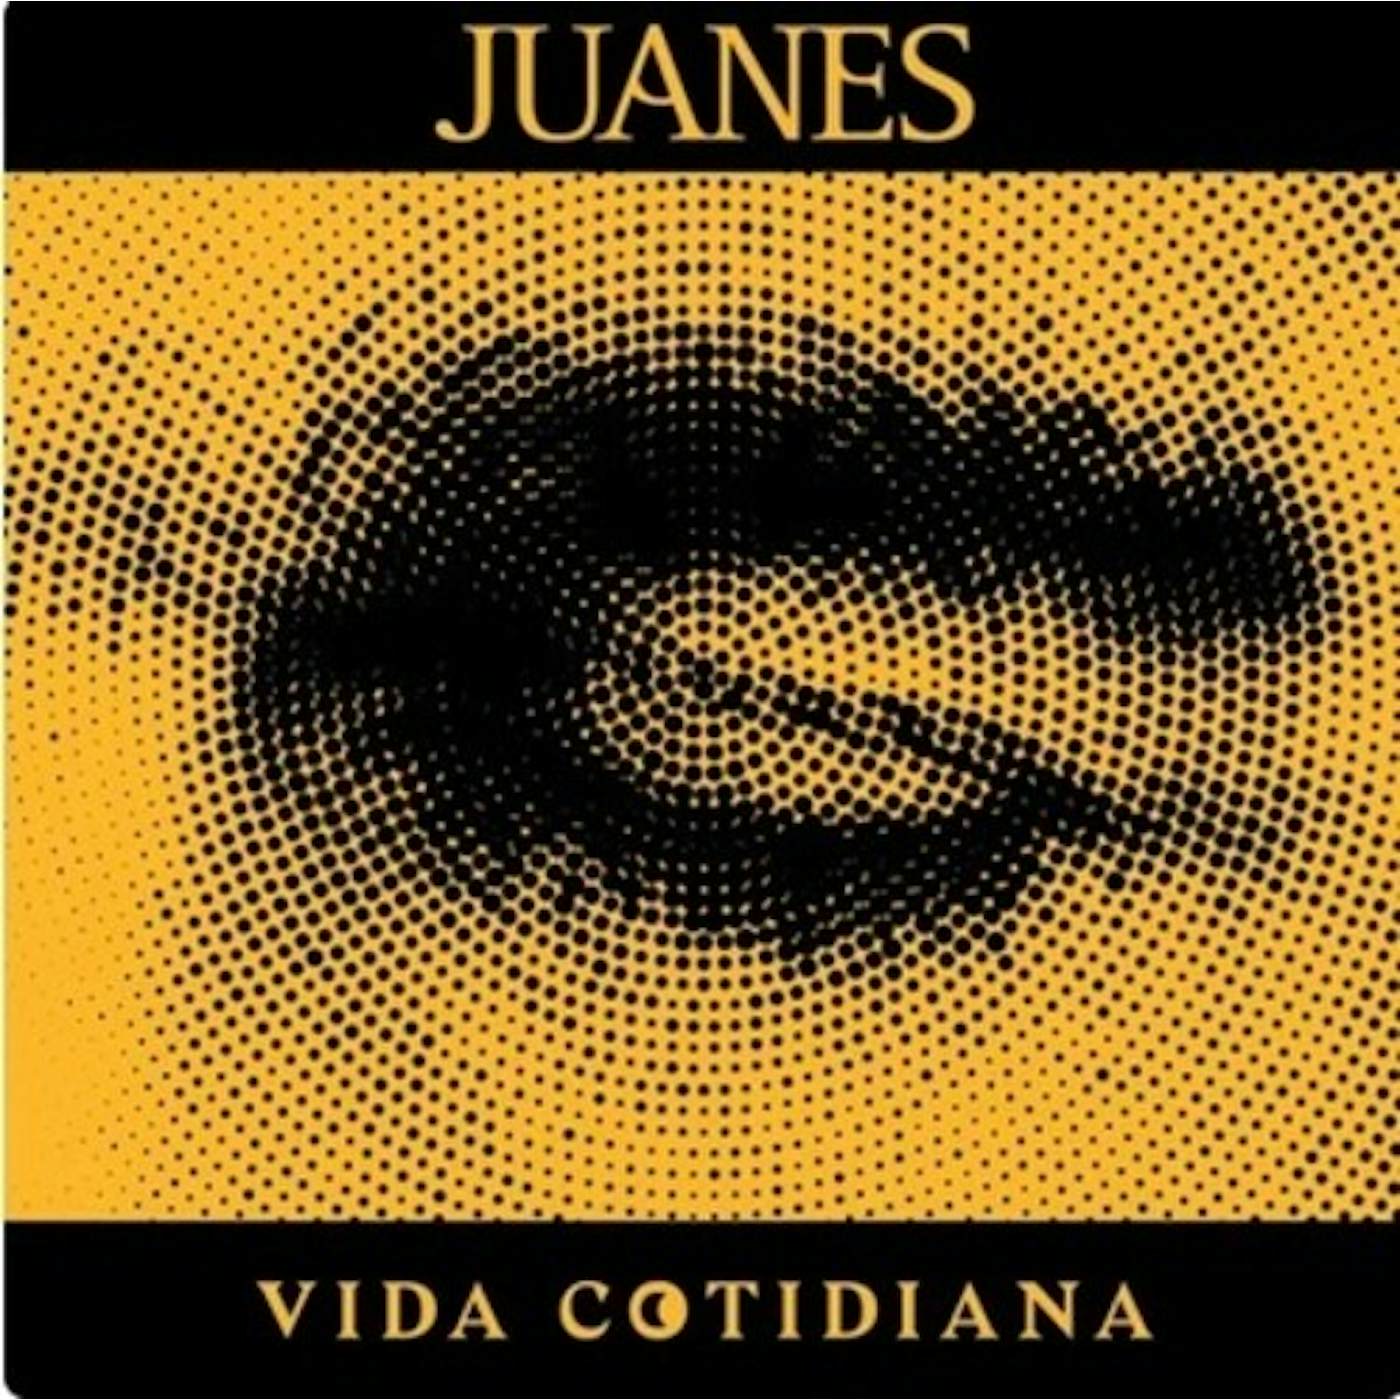 Juanes VIDA COTIDIANA CD